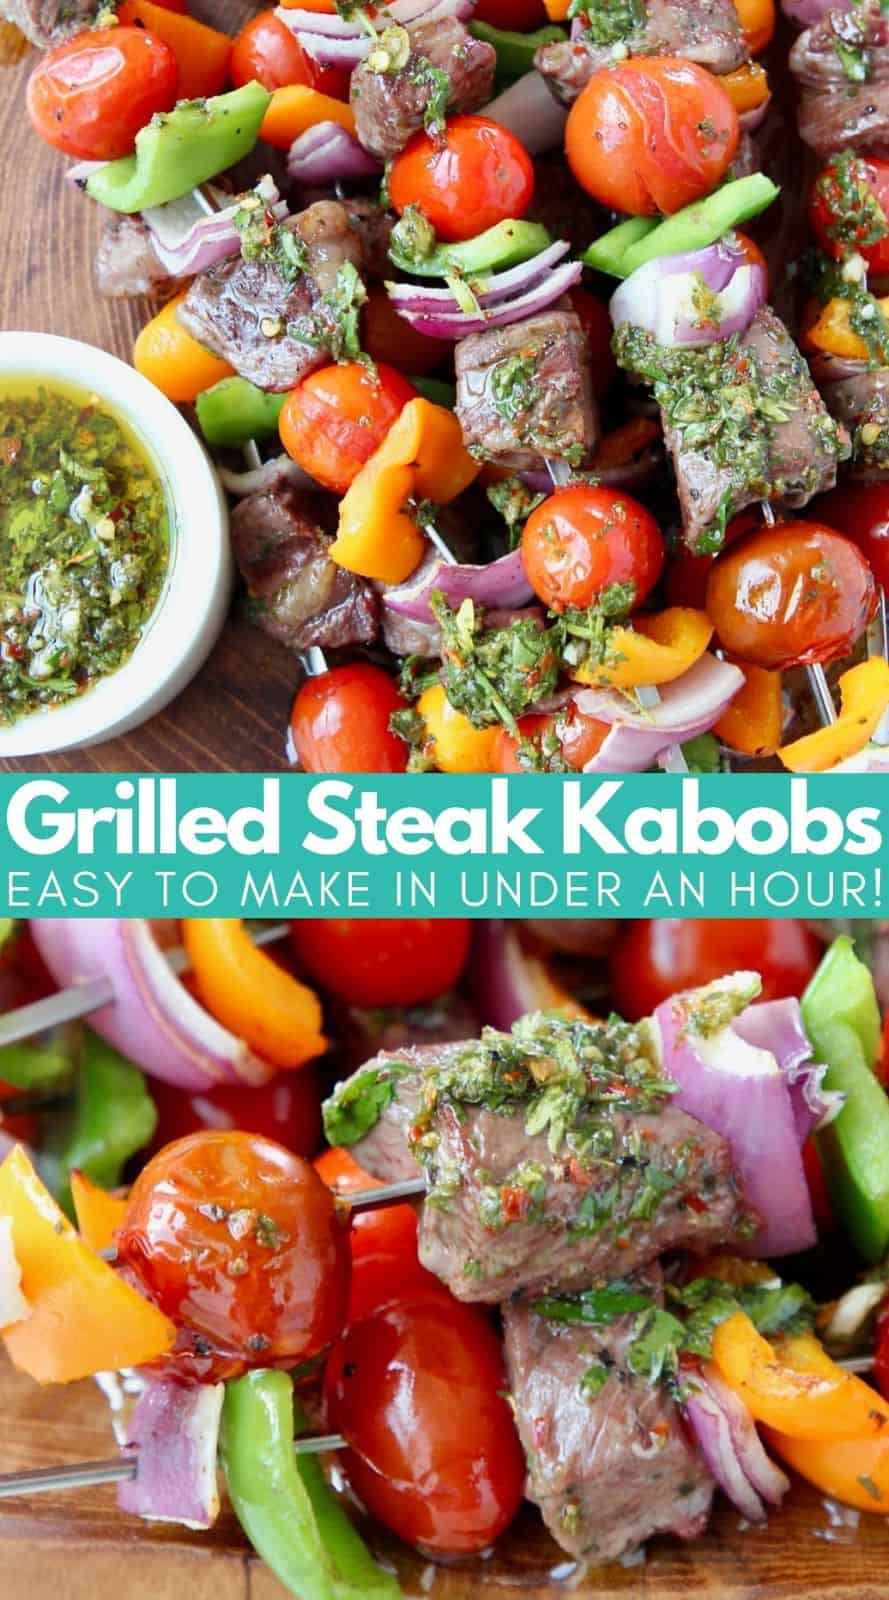 Grilled Ribeye Steak Kabobs Recipe (with Video!) - WhitneyBond.com